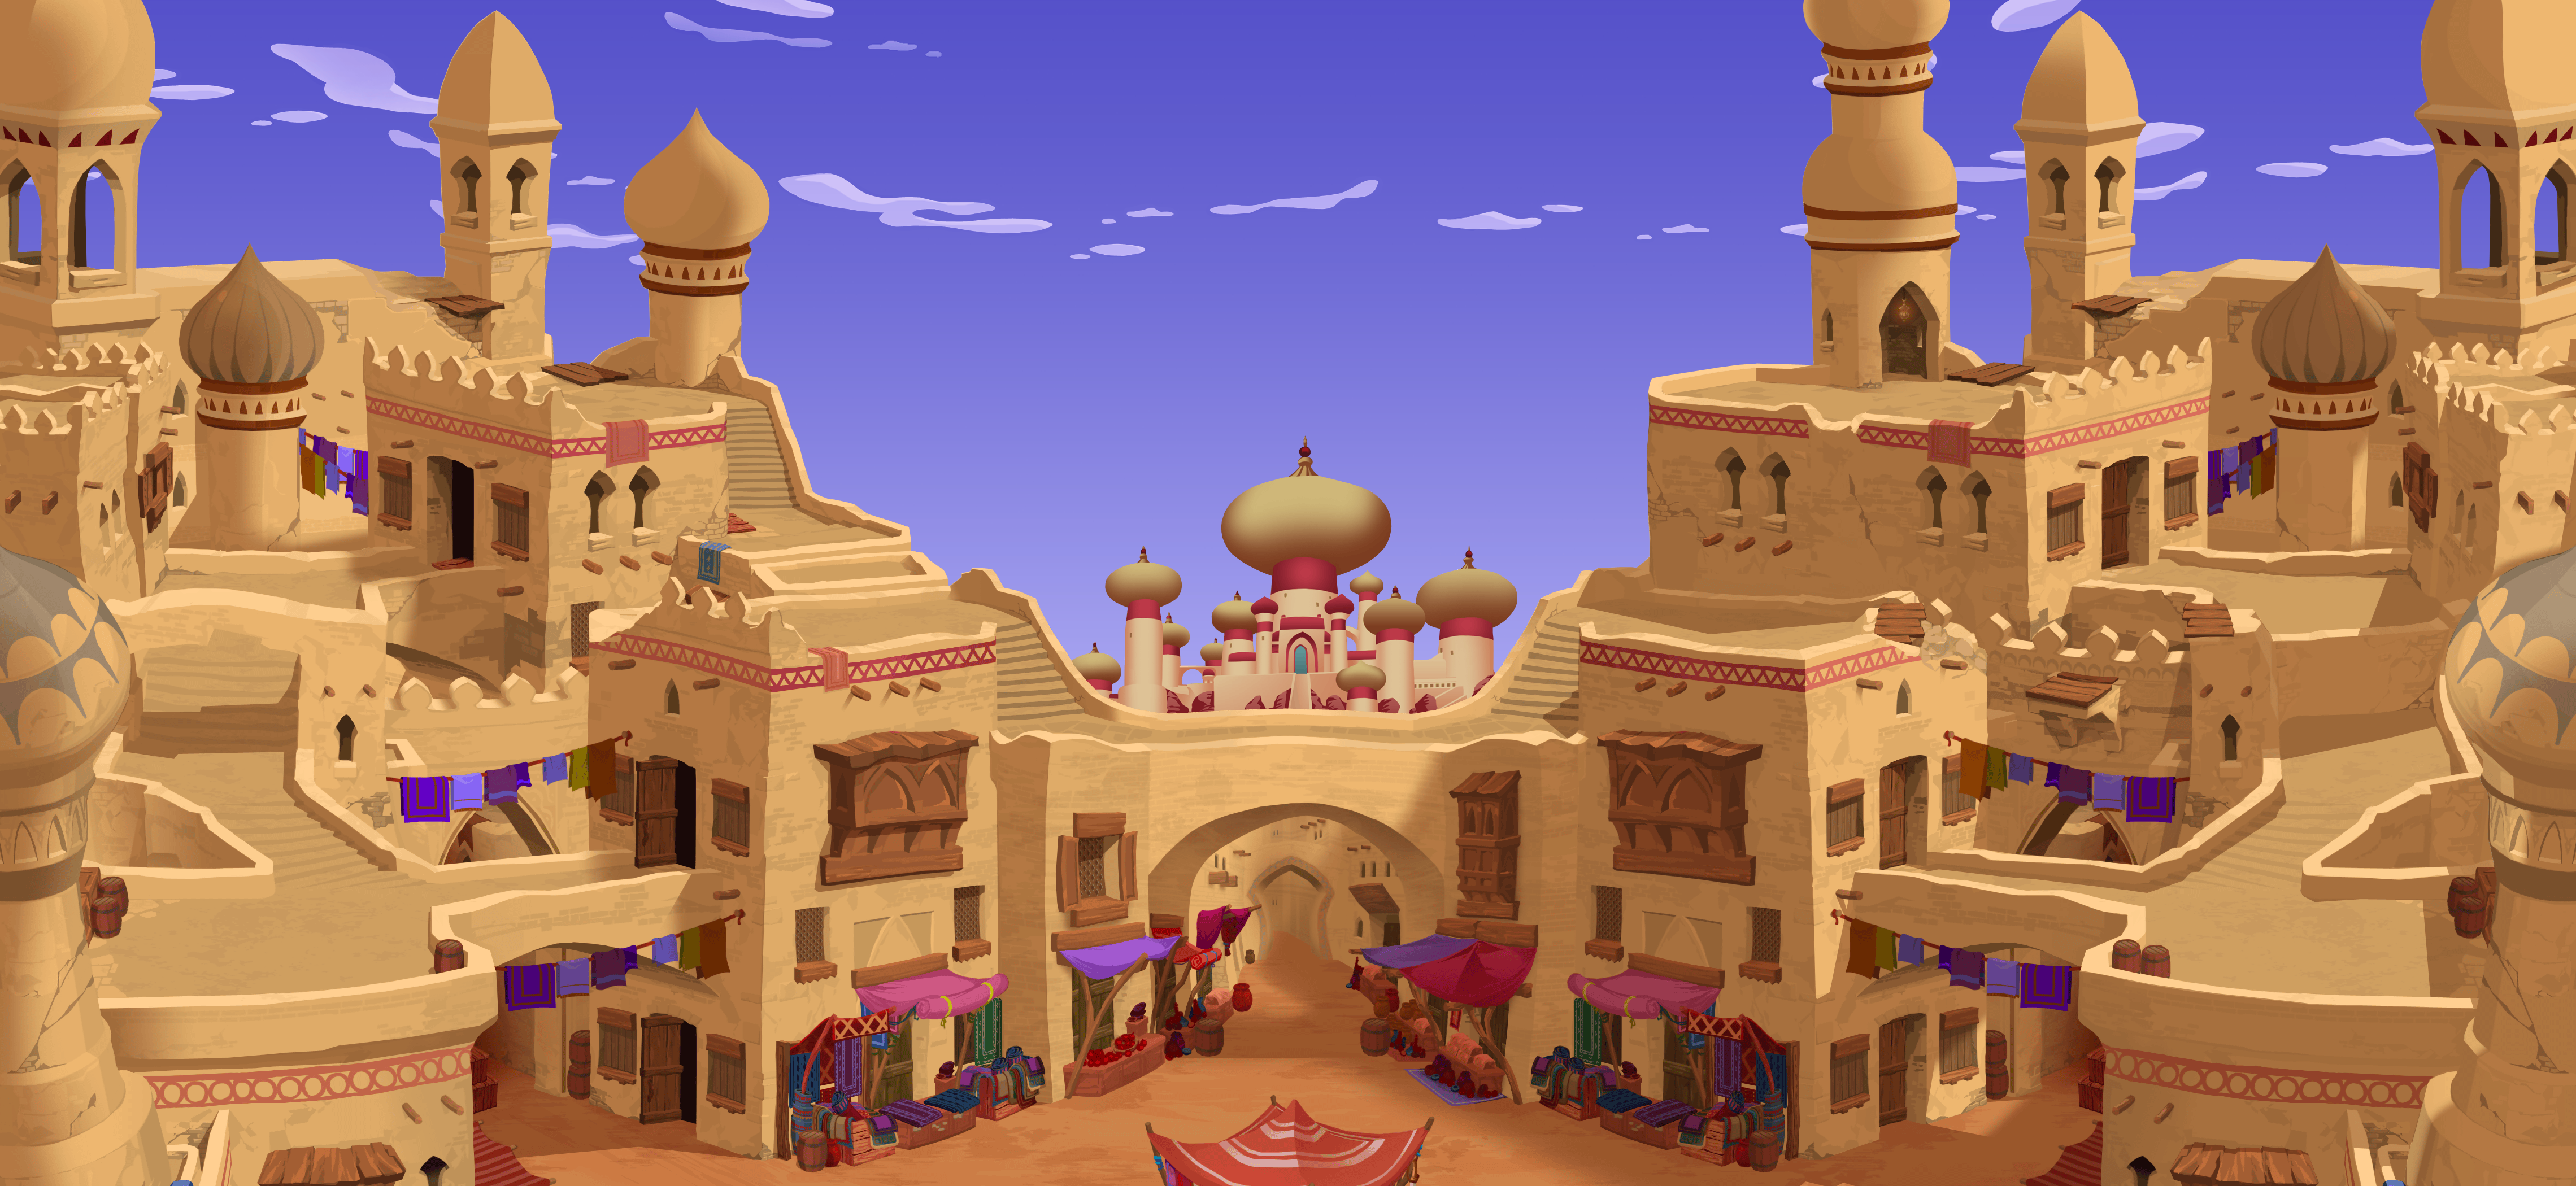 Agrabah In Aladdin Kids Animation